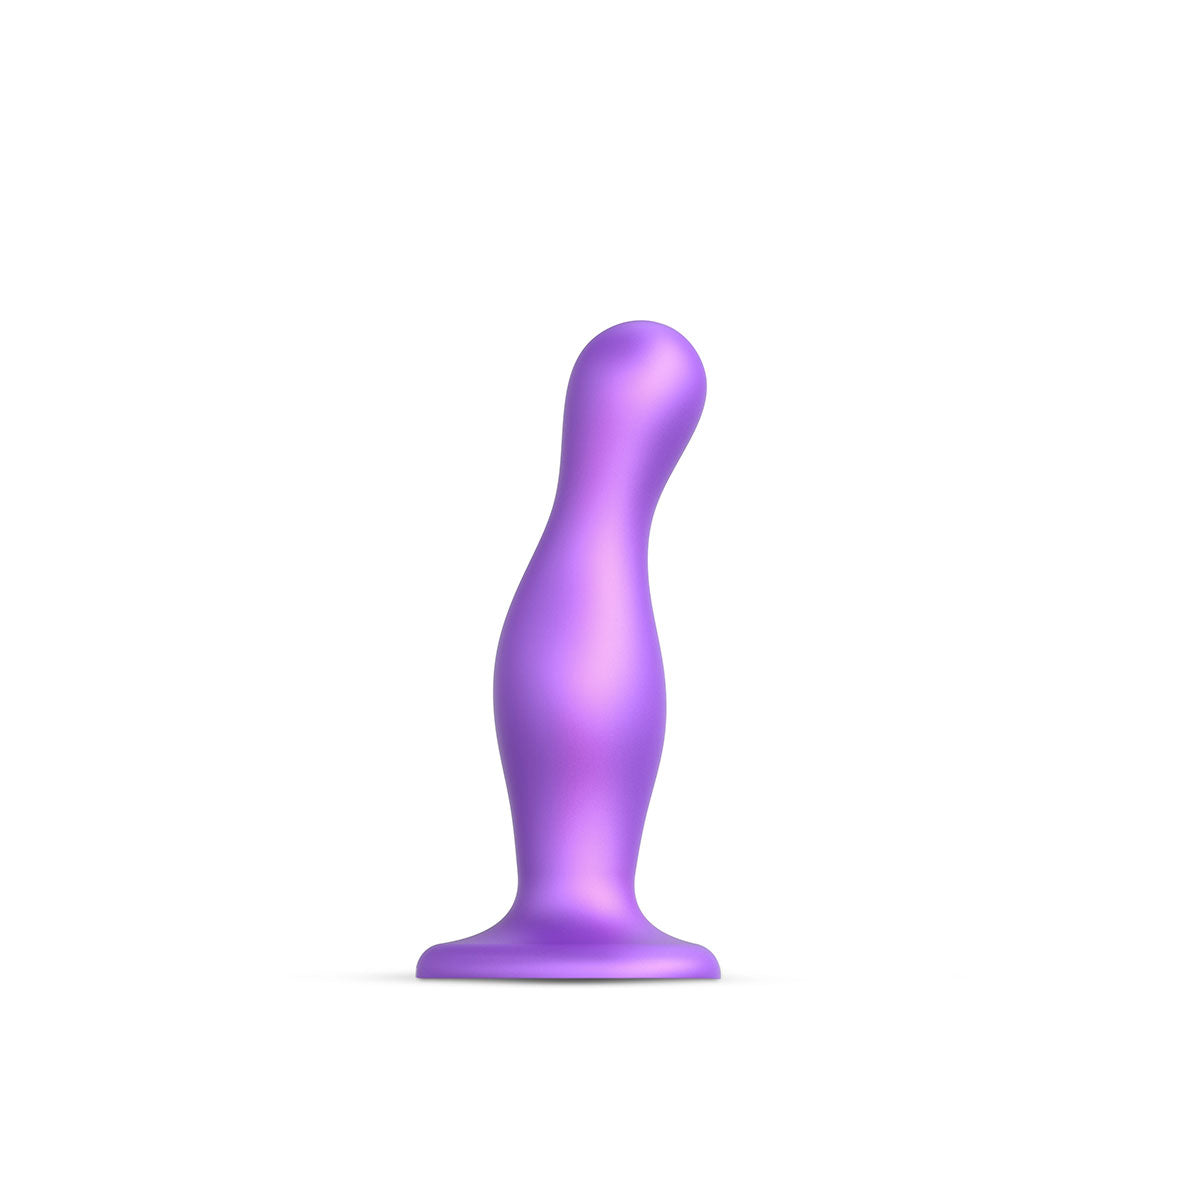 Strap-On-Me Curvy Plug Dildo Metallic Purple - Large